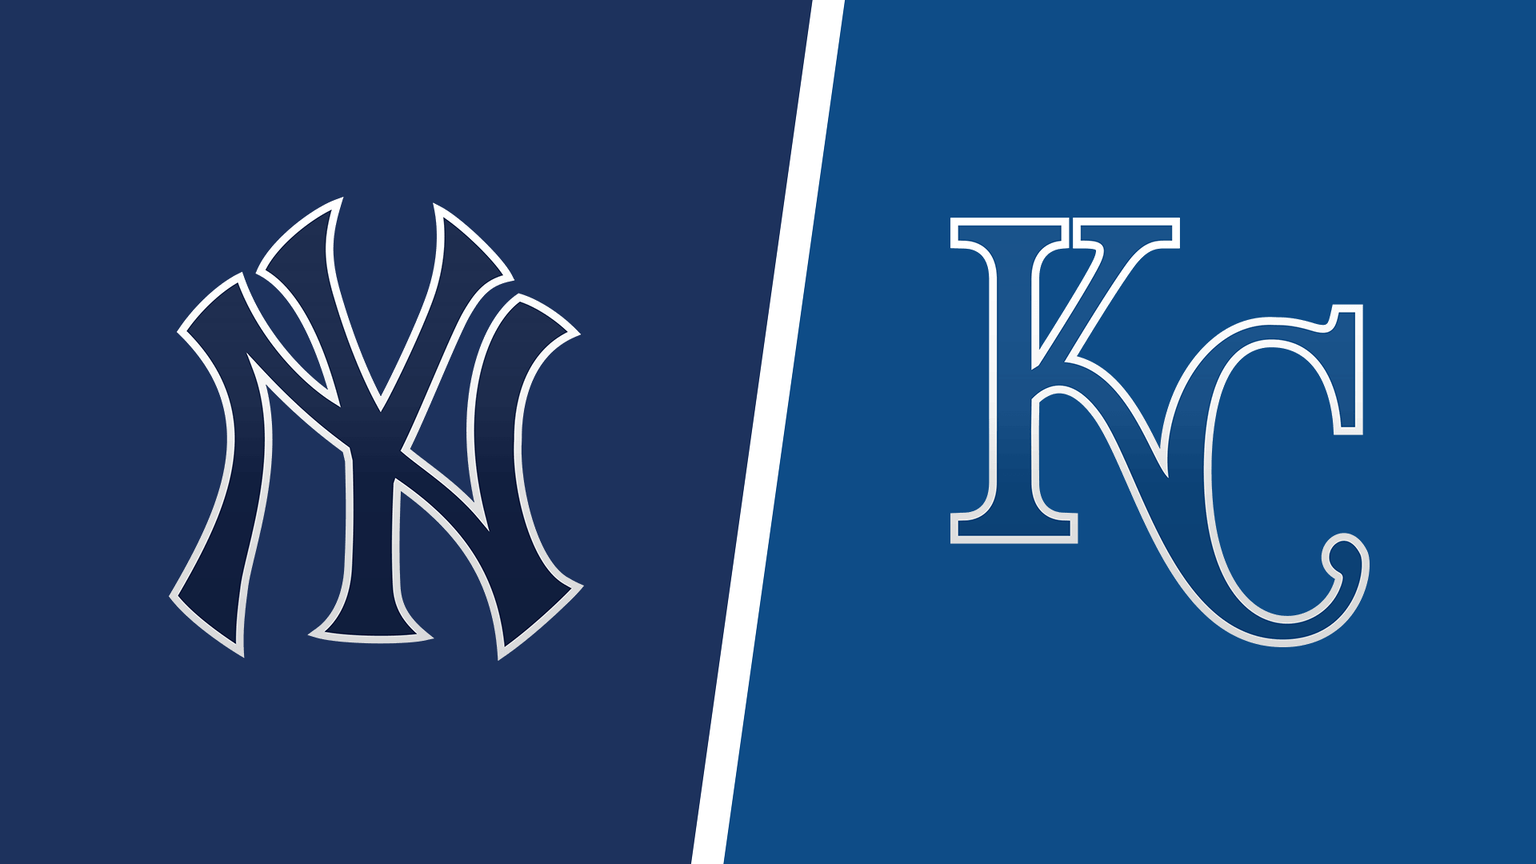 New York Yankees Vs Kansas City Royals 1536x864 Crop 